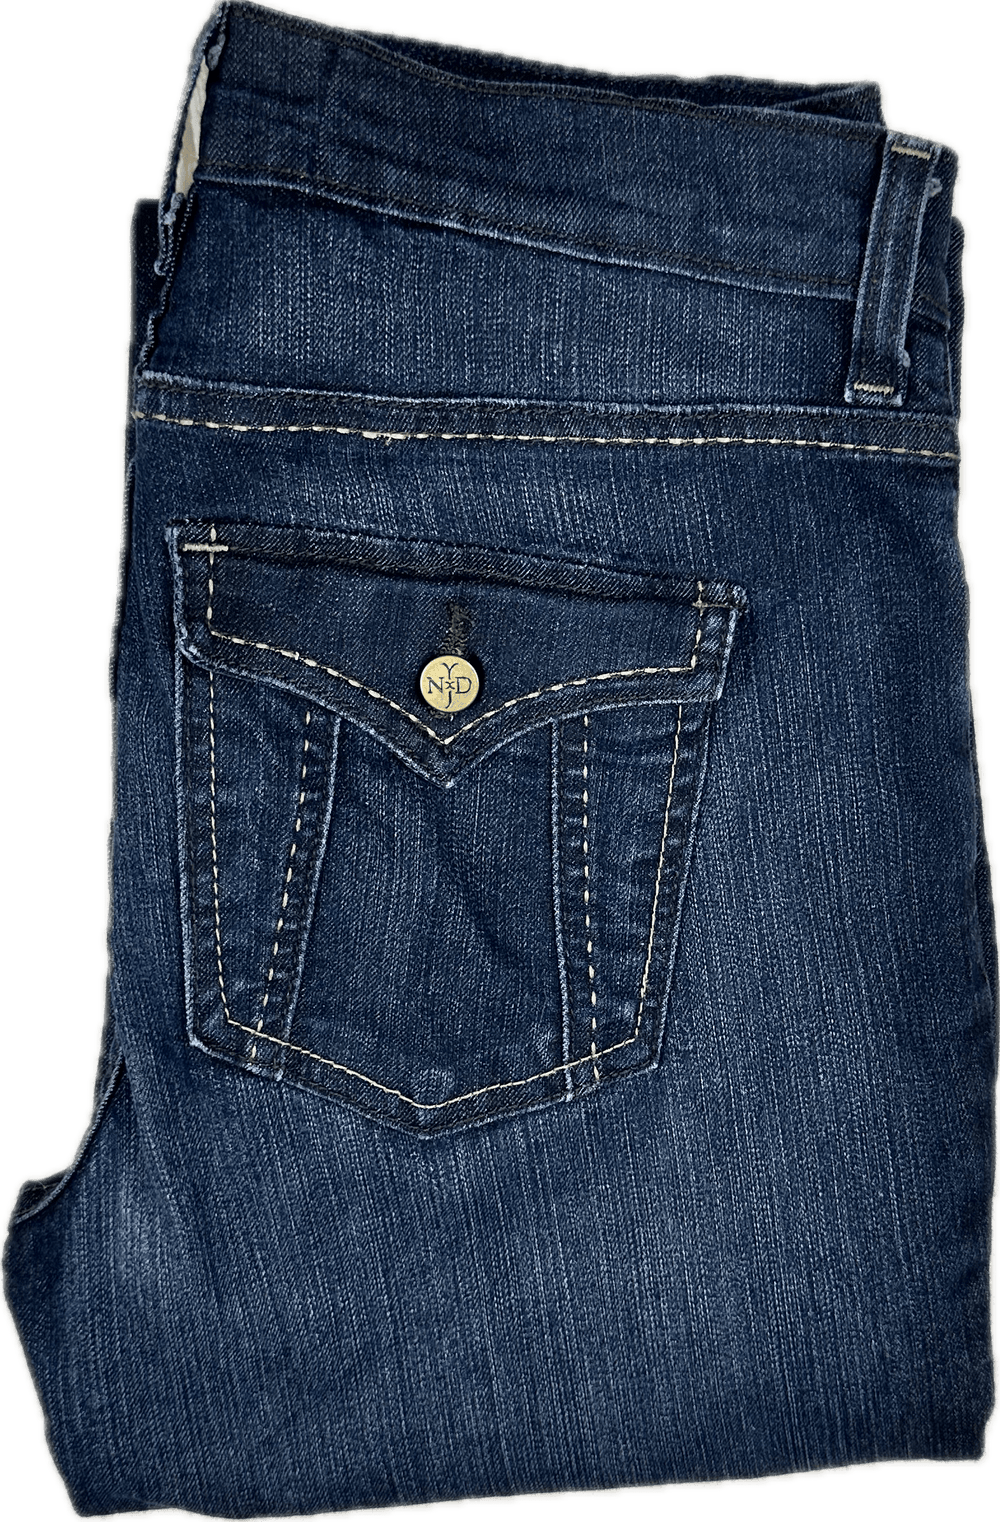 NYDJ - 'Lift & Tuck' Bootflare Jeans -Size 4 US suit 8AU - Jean Pool